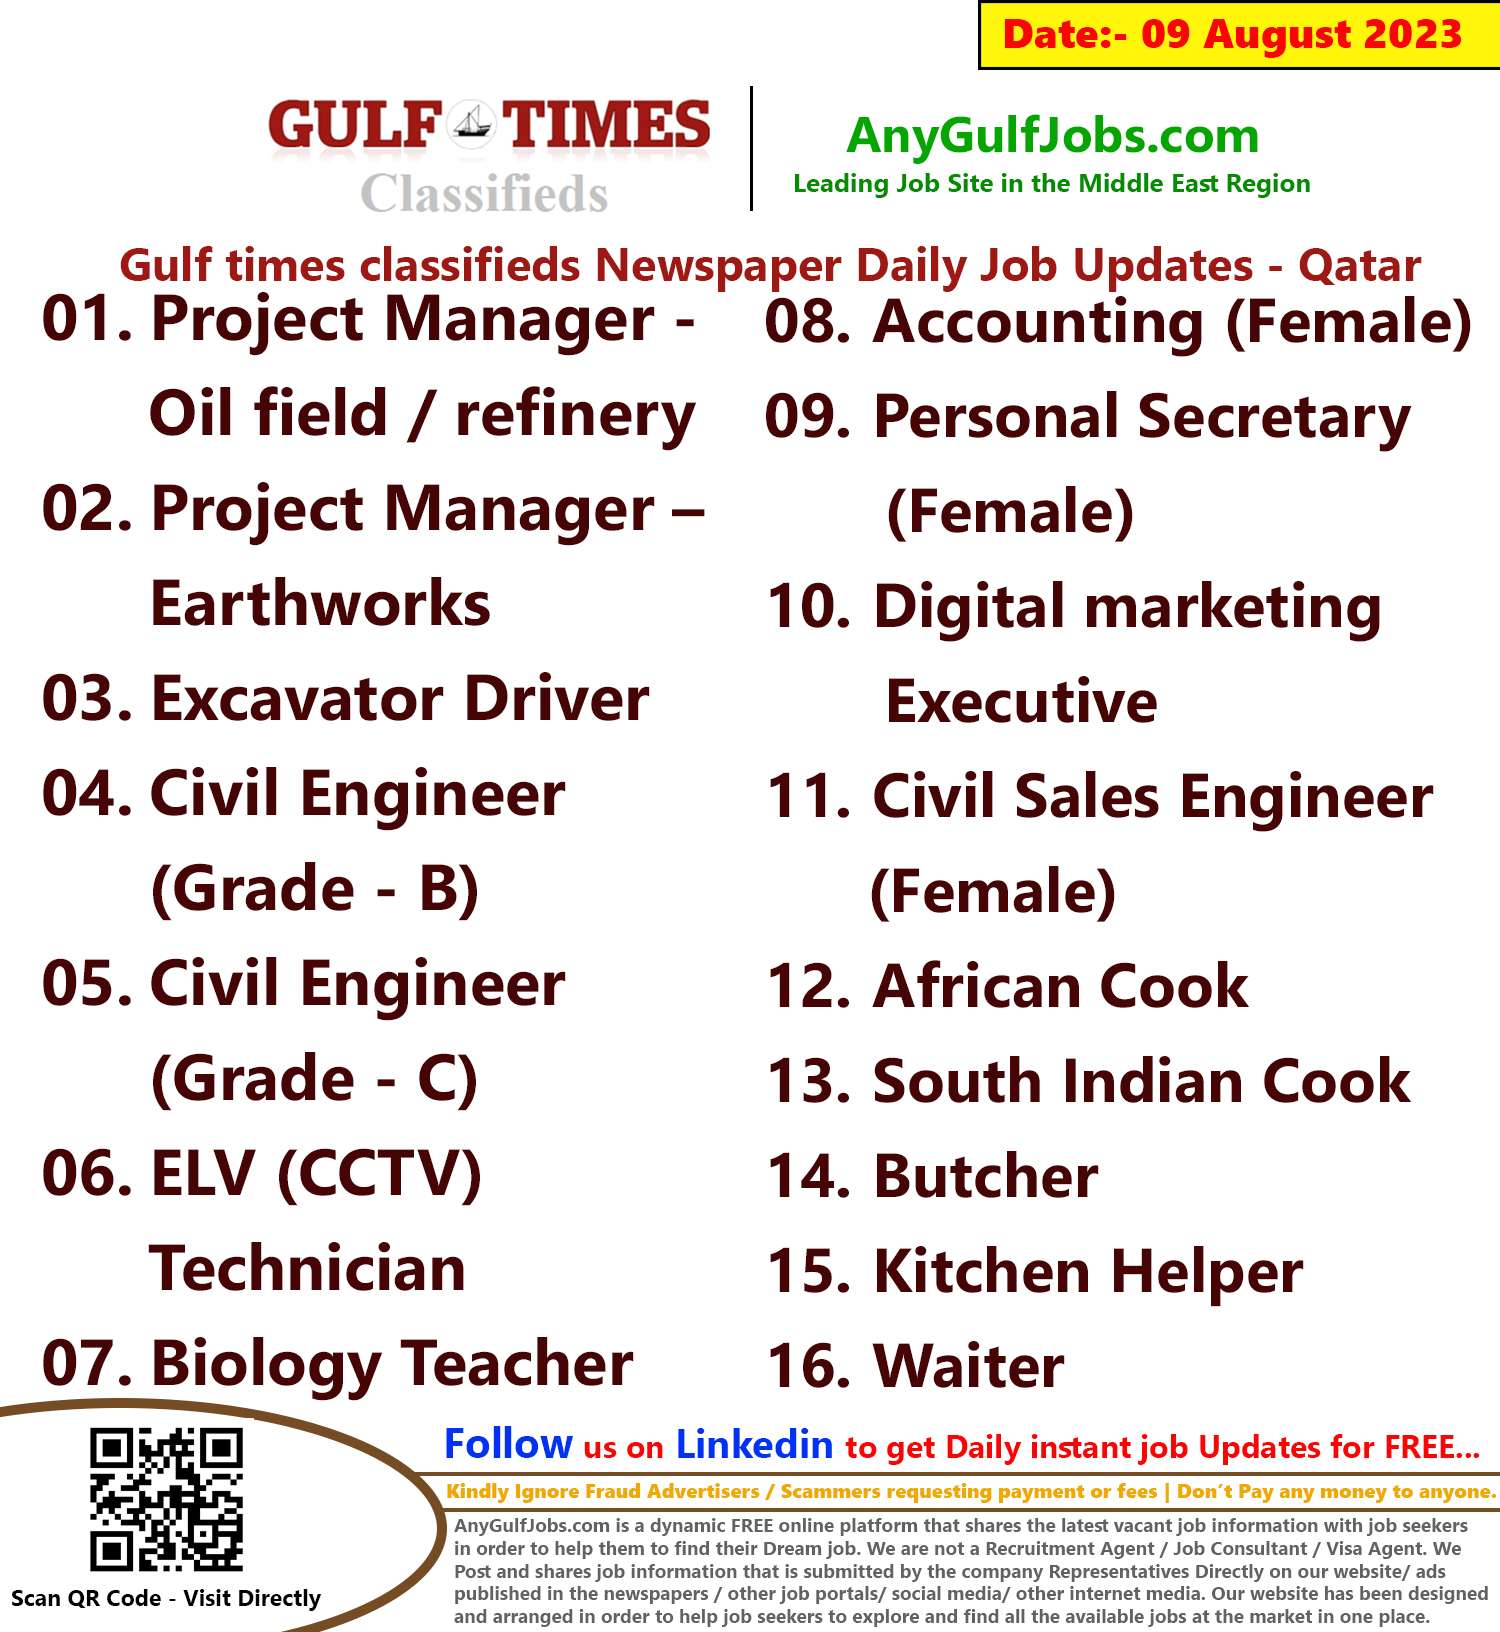 Gulf times classifieds Job Vacancies Qatar - 09 August 2023